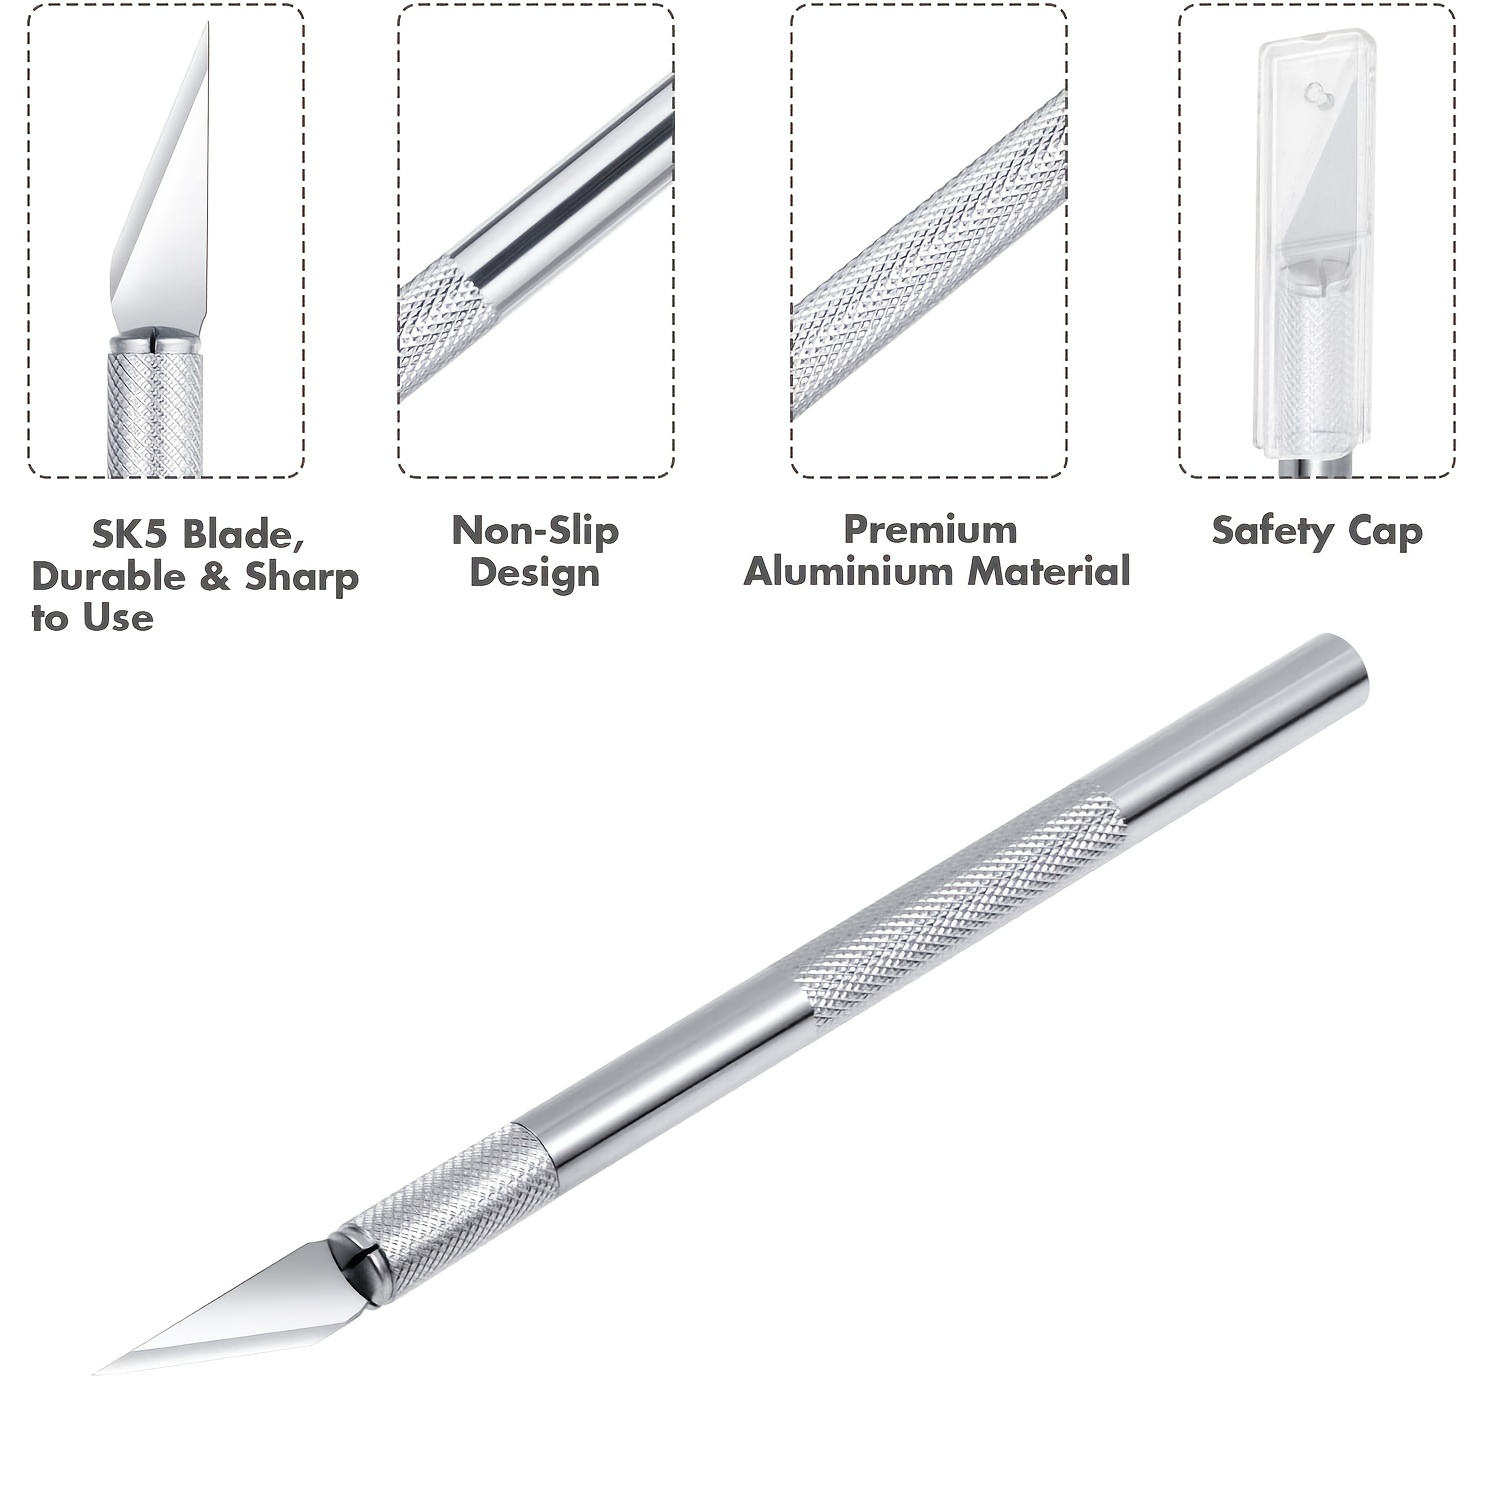 Mr. Pen- Exacto Knife Kit, Exacto Knife, 13 Piece, Craft Knife Set, Exacto Knife for Crafting, Cutter, Pen Knife, Razor Knife, Craft Knife, Exacto